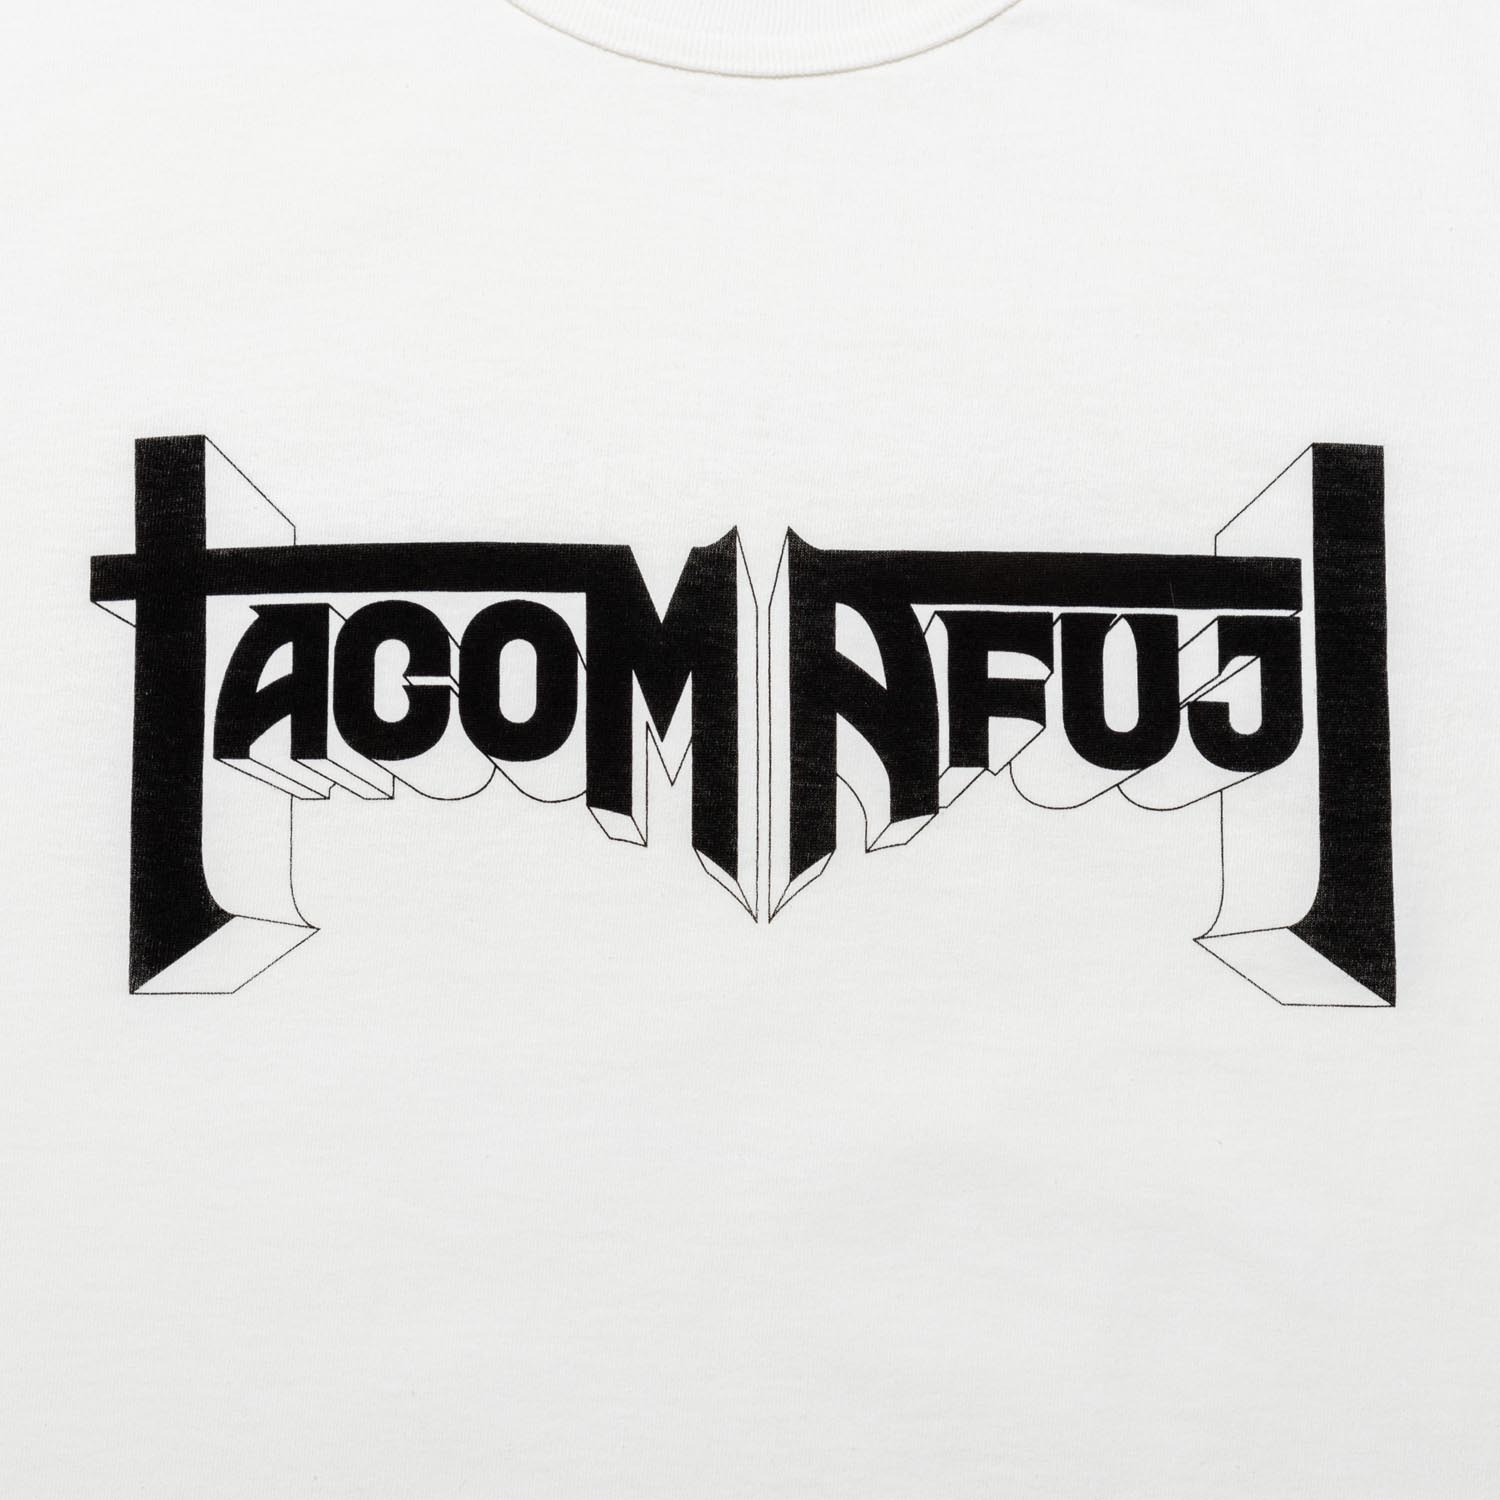 TACOM AFUJI designed by Hiroshi Iguchi